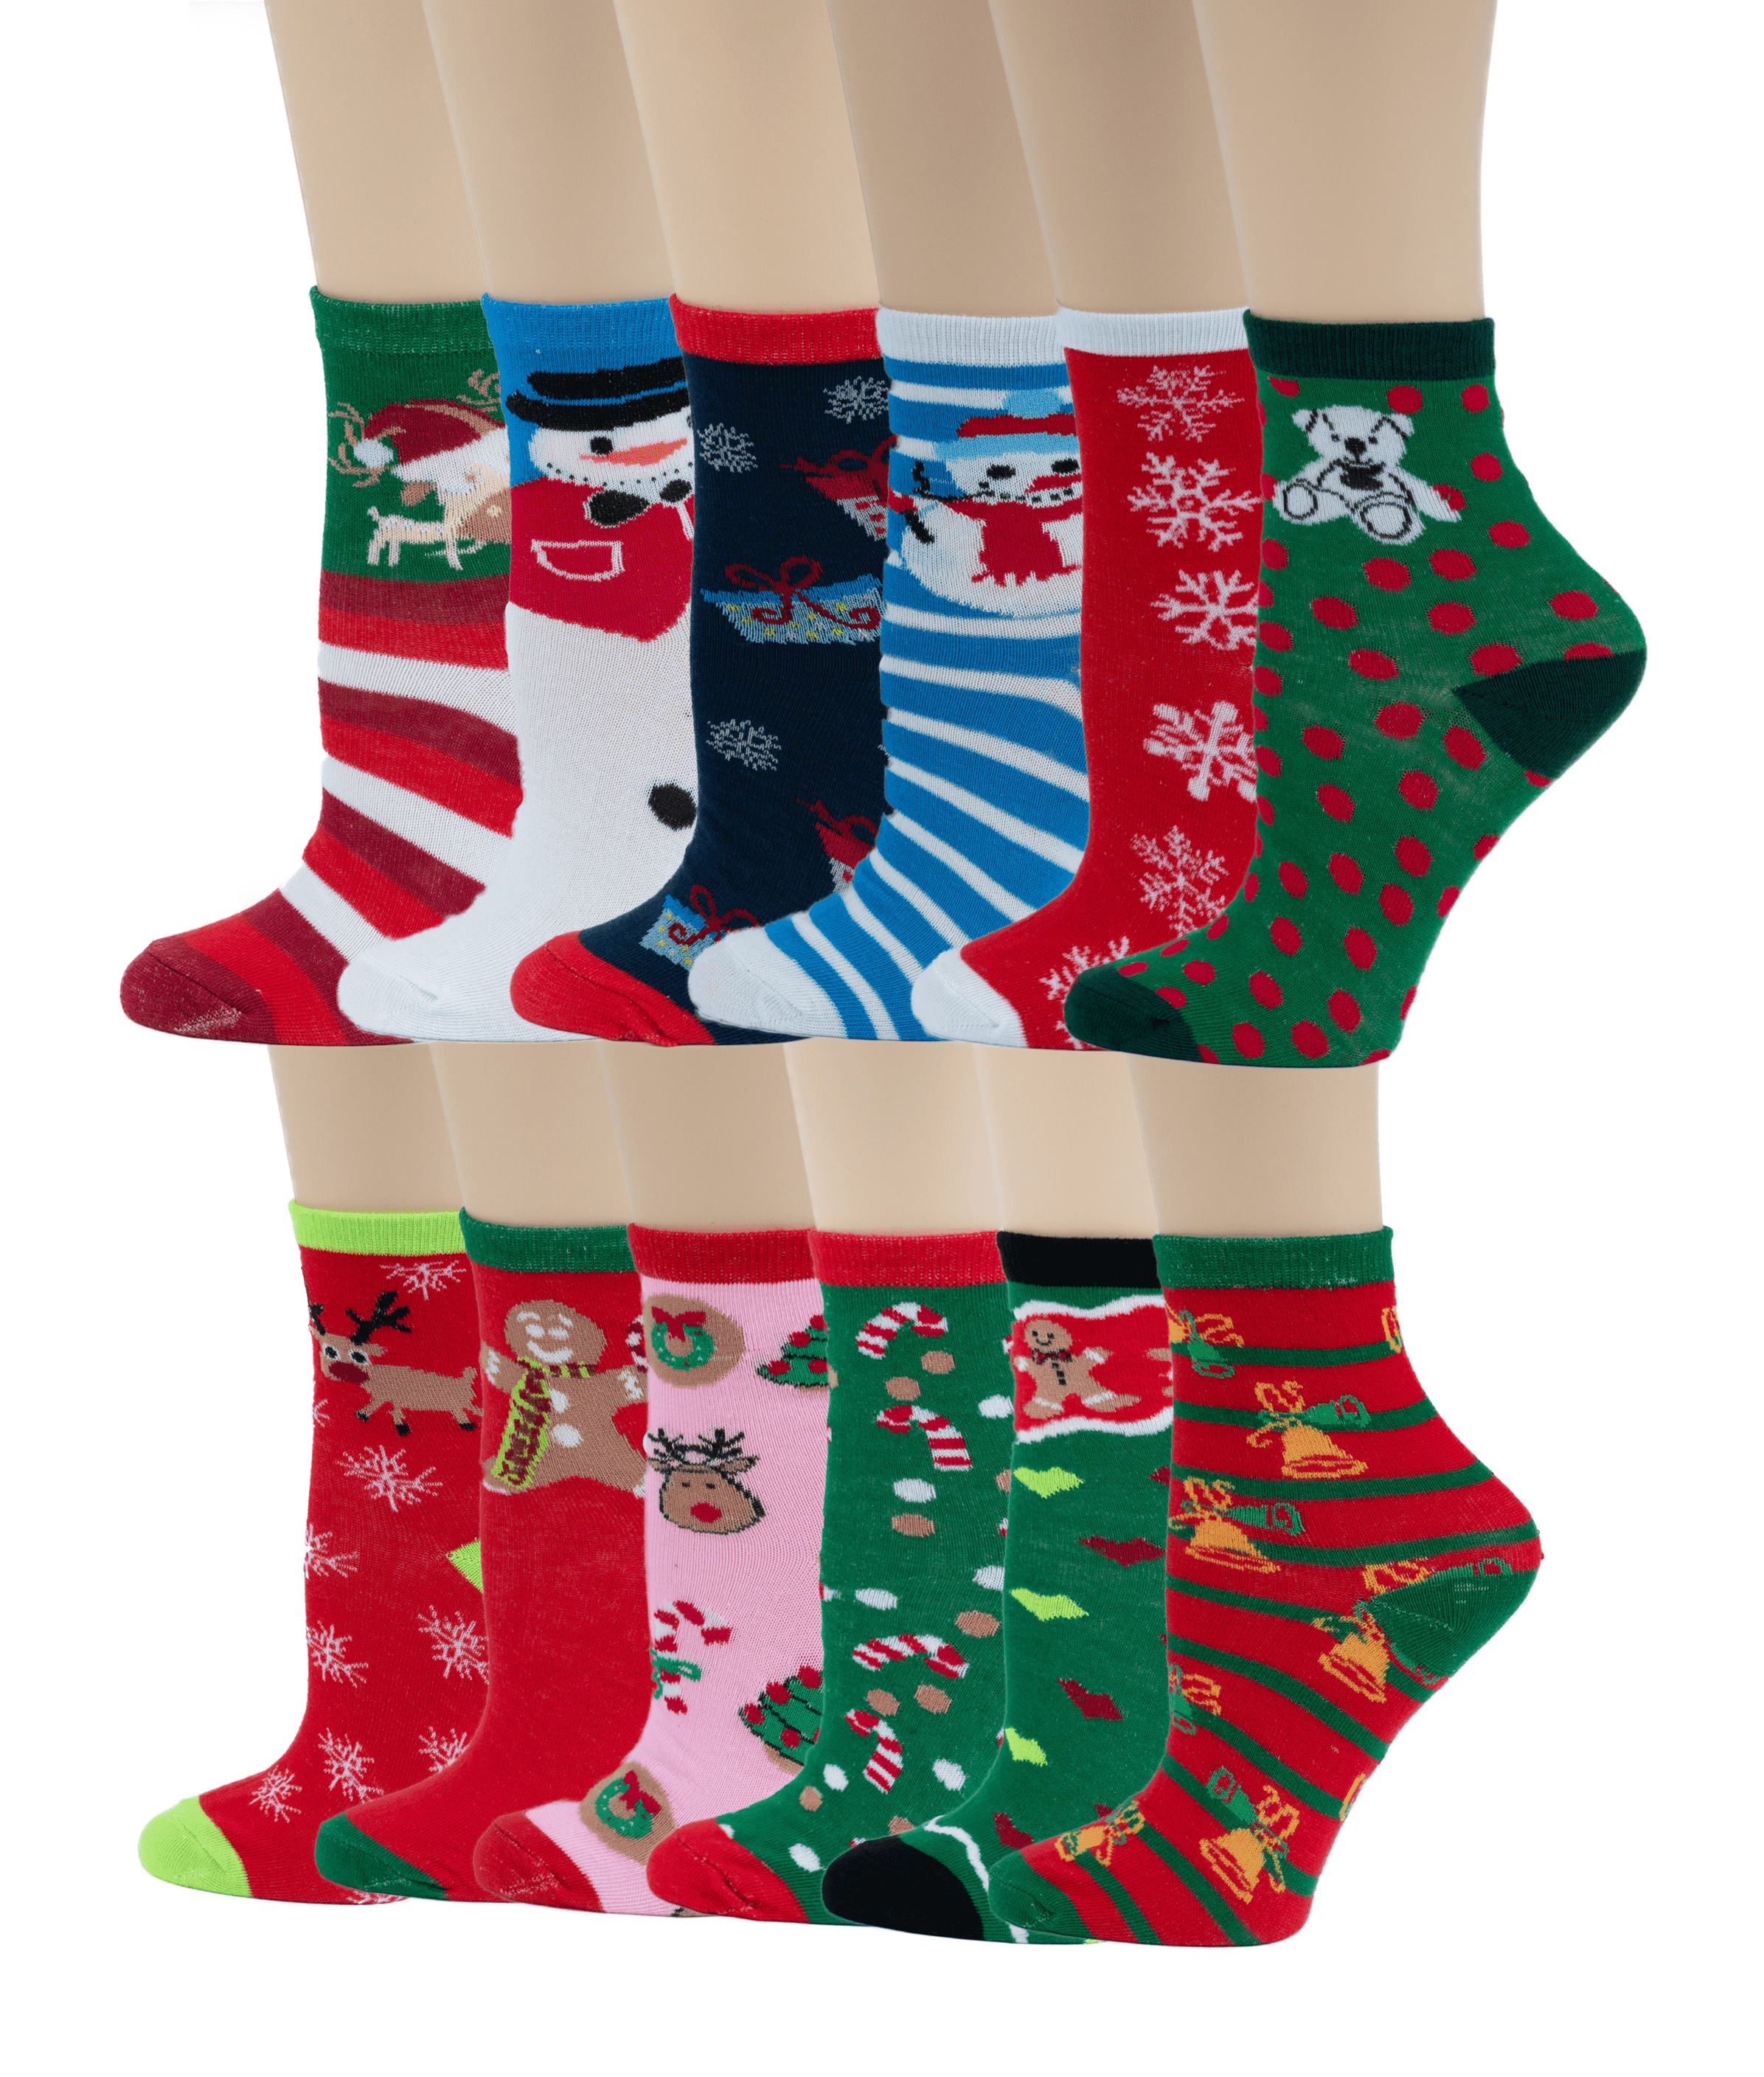 Academyus Christmas Socks Kids Baby Boy Girl Santa Claus Elk Snowflake Ankle Socks Gift 